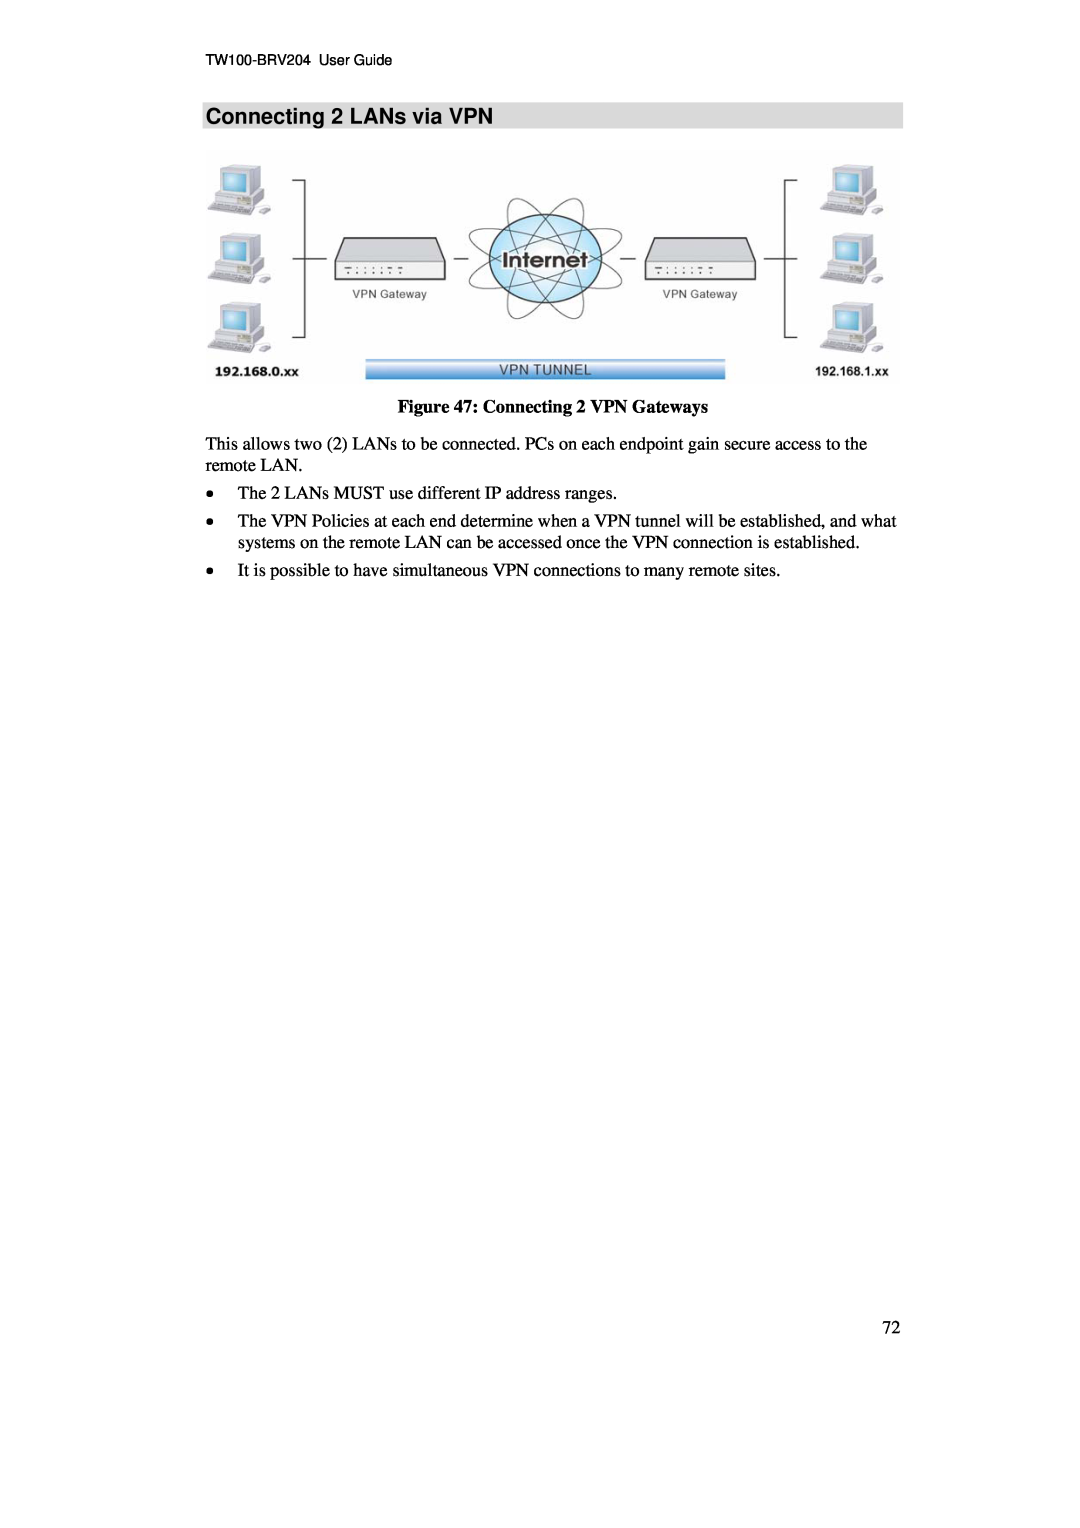 TRENDnet BRV204 manual Connecting 2 LANs via VPN, Connecting 2 VPN Gateways 